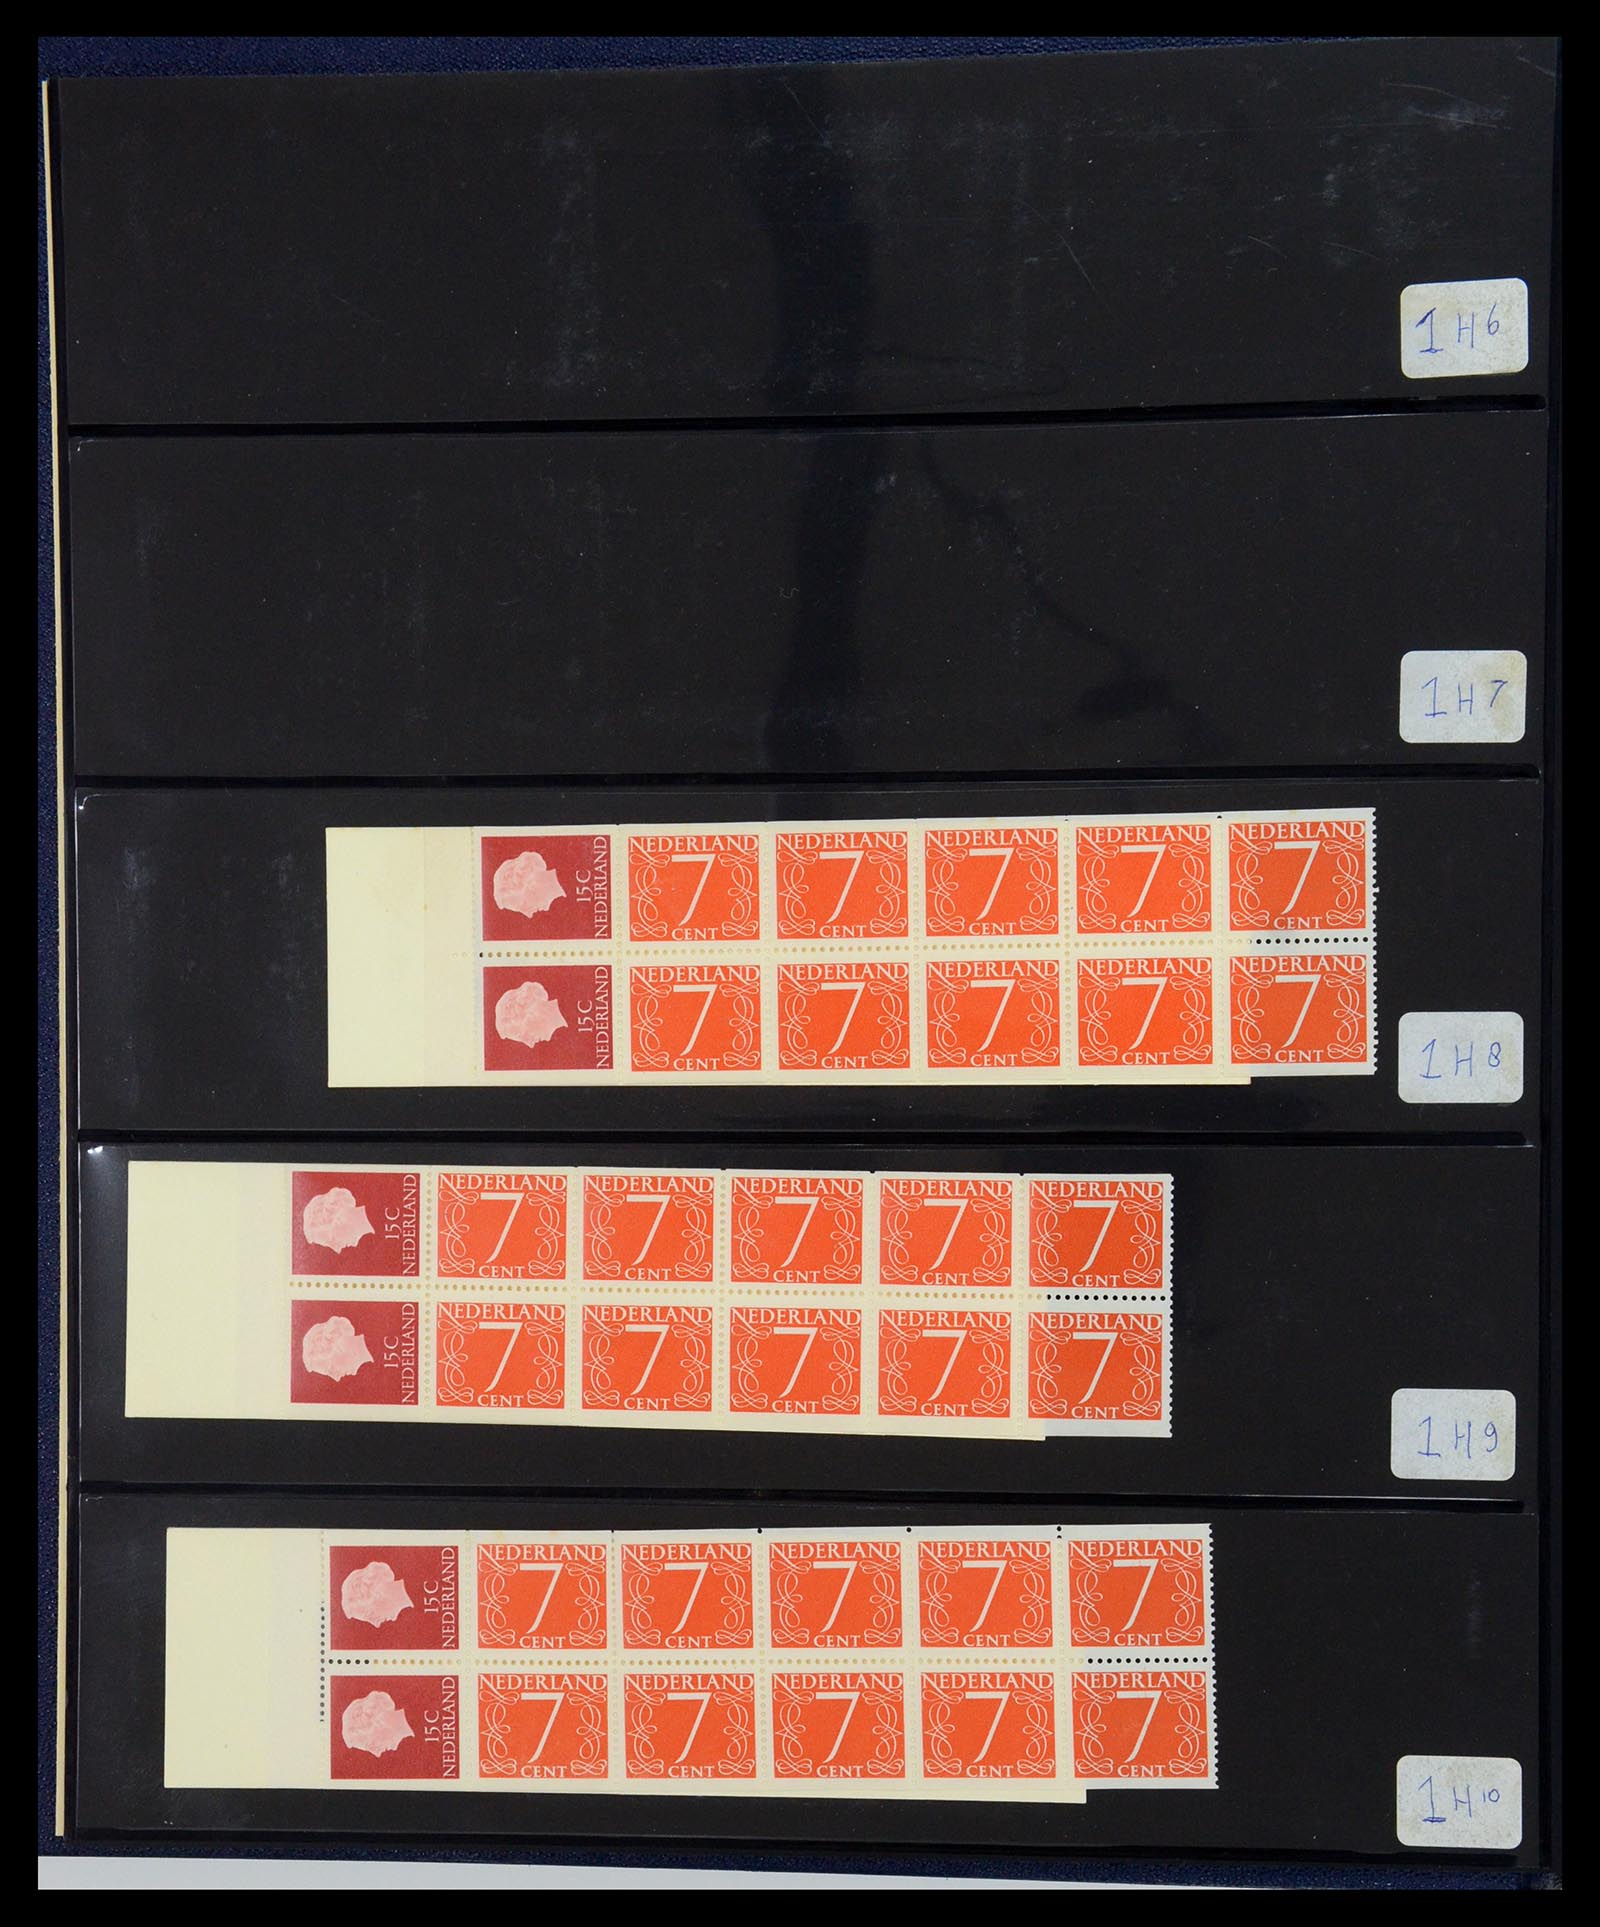 35821 002 - Stamp Collection 35821 Netherlands stamp booklets 1964-1983.